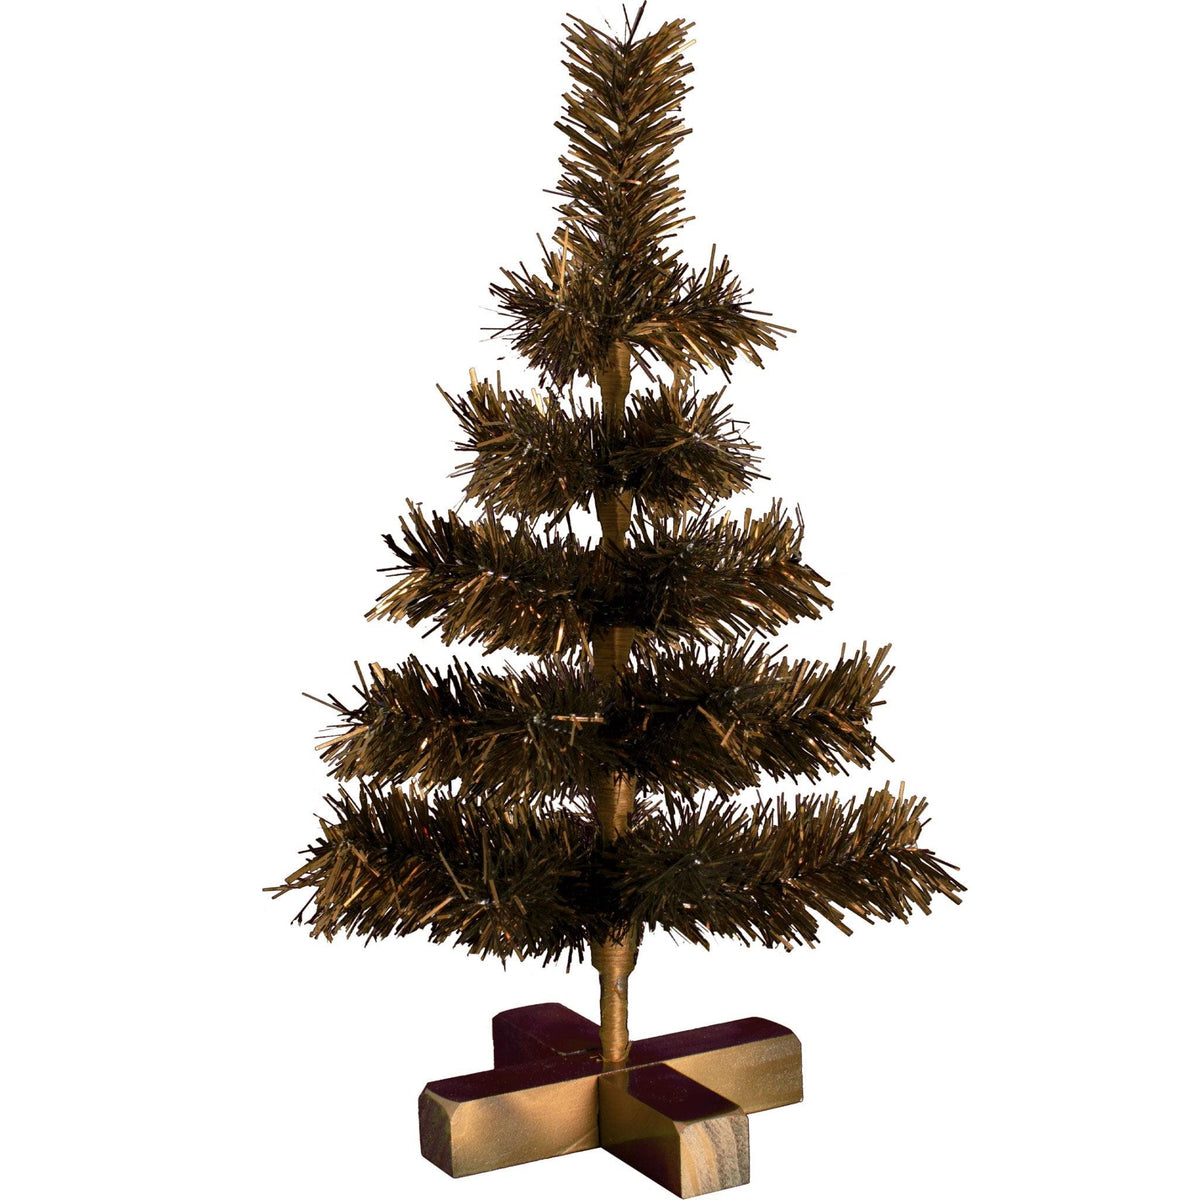 Lee Display's brand new 18in Vintage Copper Tinsel Christmas Trees on sale at leedisplay.com